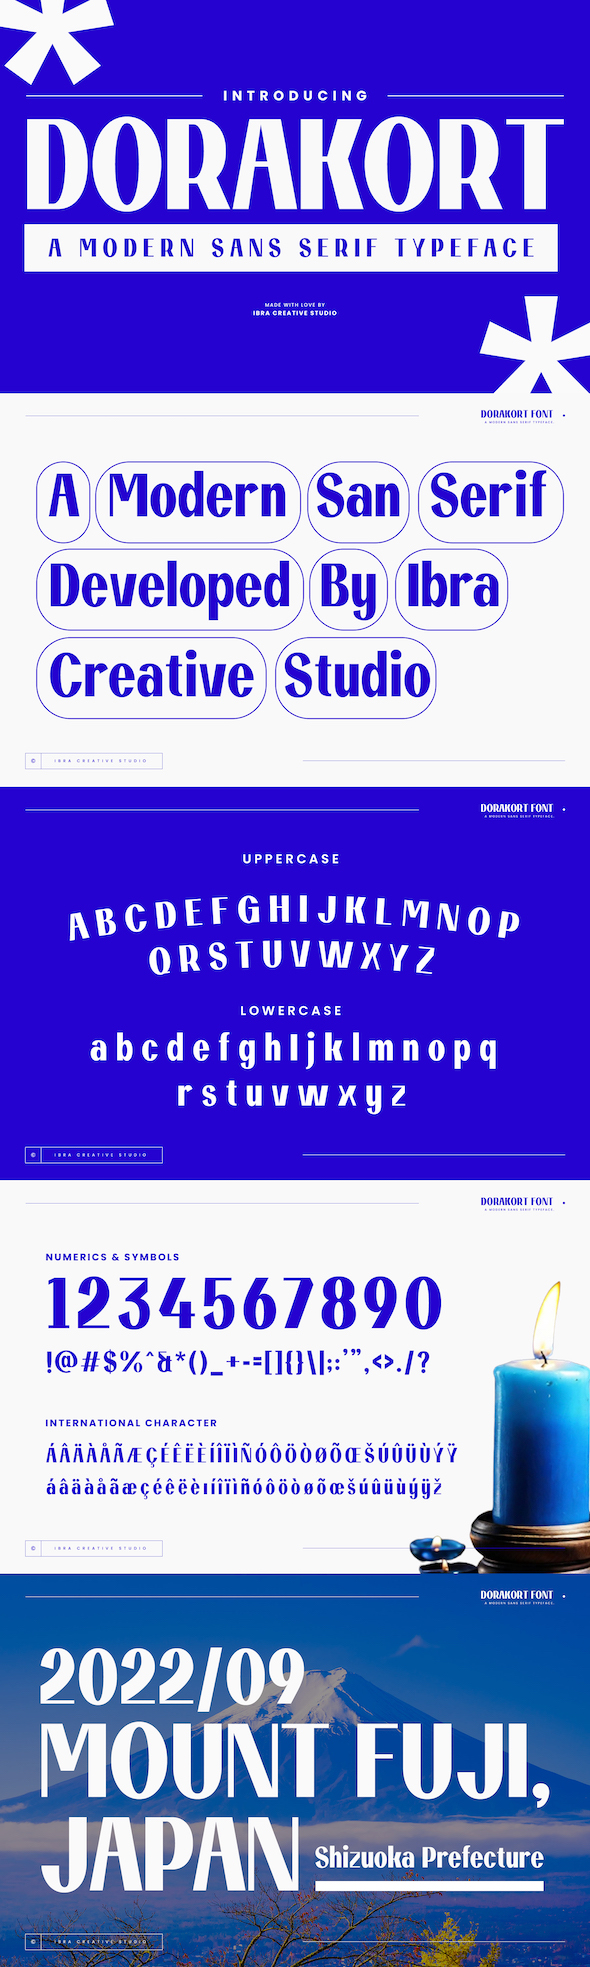 [DOWNLOAD]Dorakort - A Modern Sans Serif Typeface